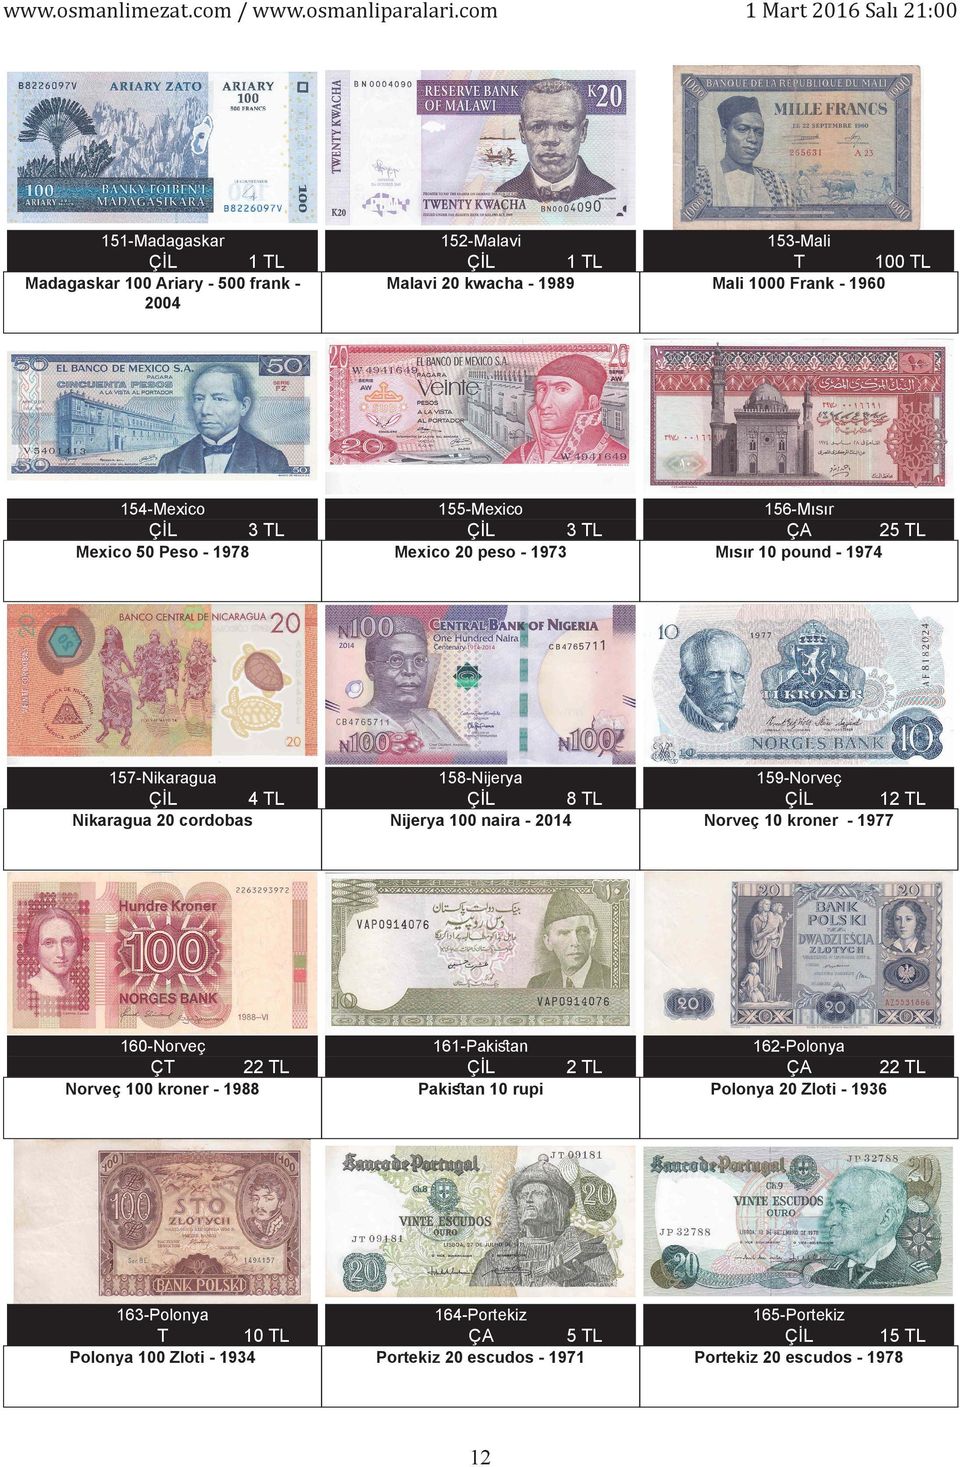 Nikaragua 20 cordobas Nijerya 100 naira - 2014 Norveç 10 kroner - 1977 160-Norveç 161-Pakistan 162-Polonya 2 Norveç 100 kroner - 1988 Pakistan 10